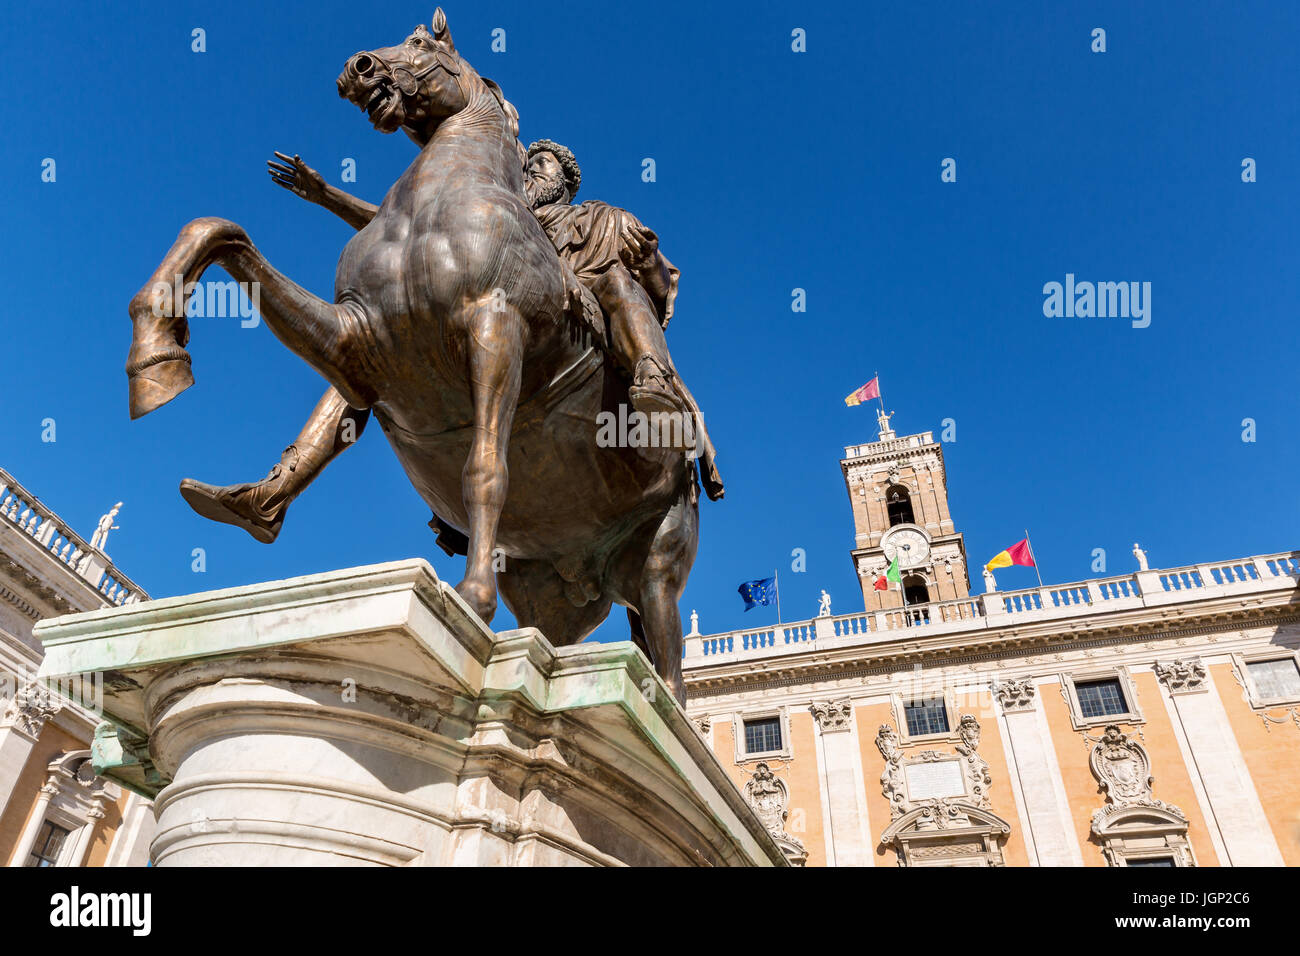 The replica of the Marcus Aurelius bronze equestrian statue, Capitoline Hill, Rome, Italy Stock Photo